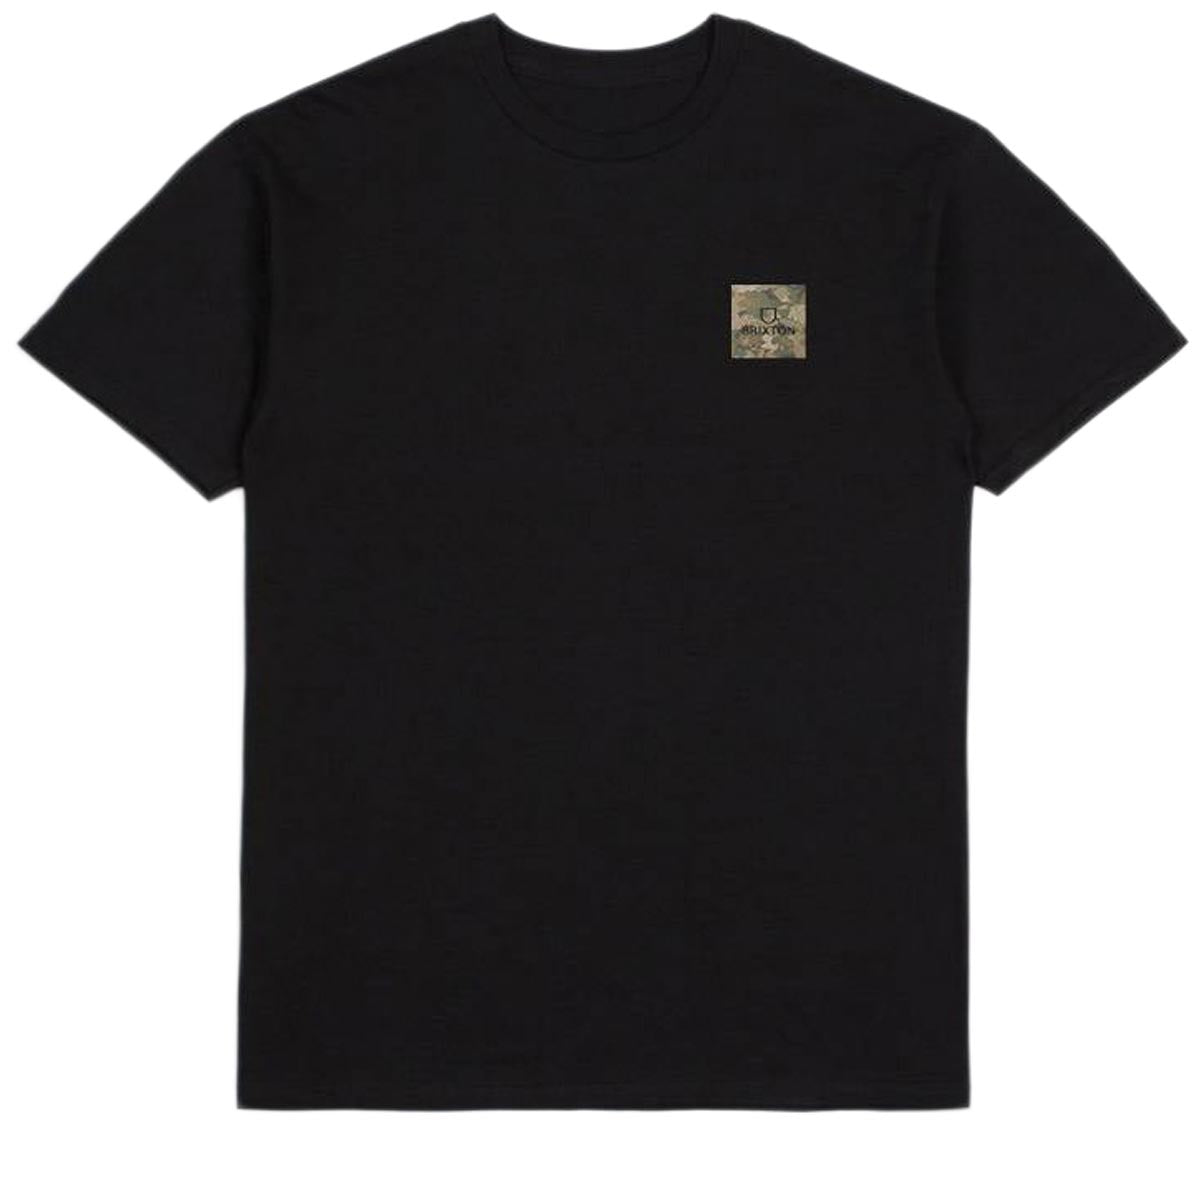 Brixton Alpha Square T-Shirt - Black/Leaf Camo image 2